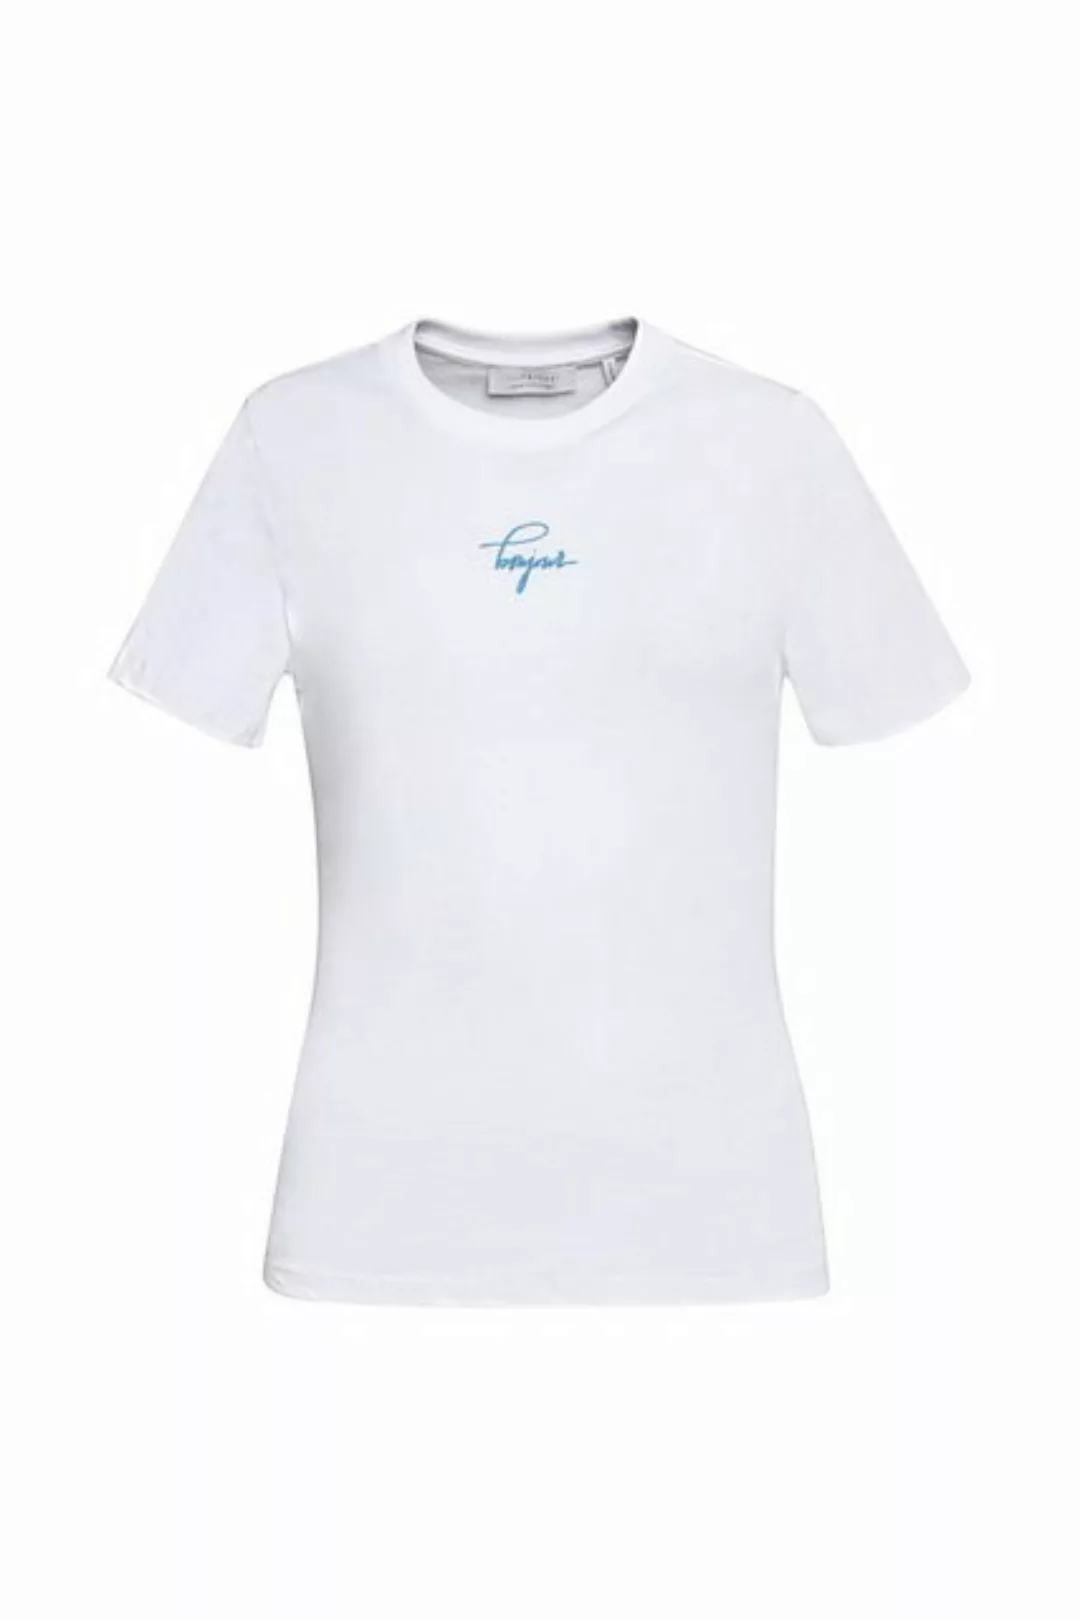 Rich & Royal T-Shirt Slim fit T-Shirt bonjour organic, cruise blue günstig online kaufen